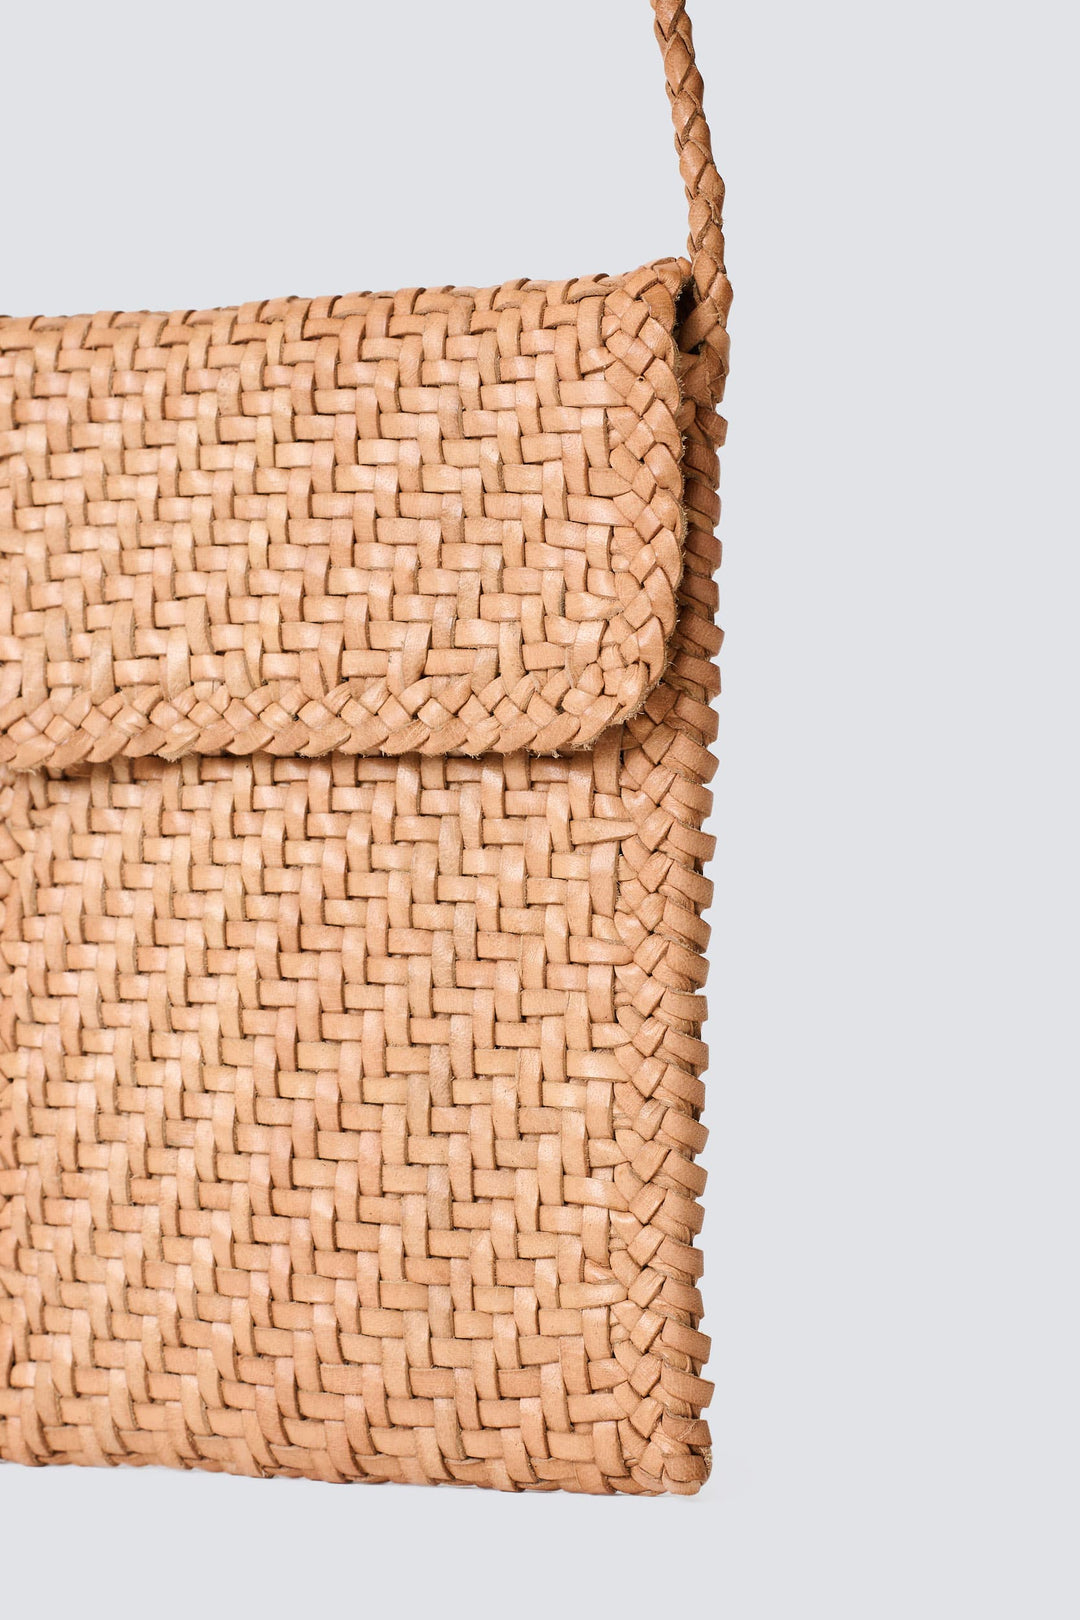 Dragon Diffusion woven leather bag handmade - Phone Crossbody Natural